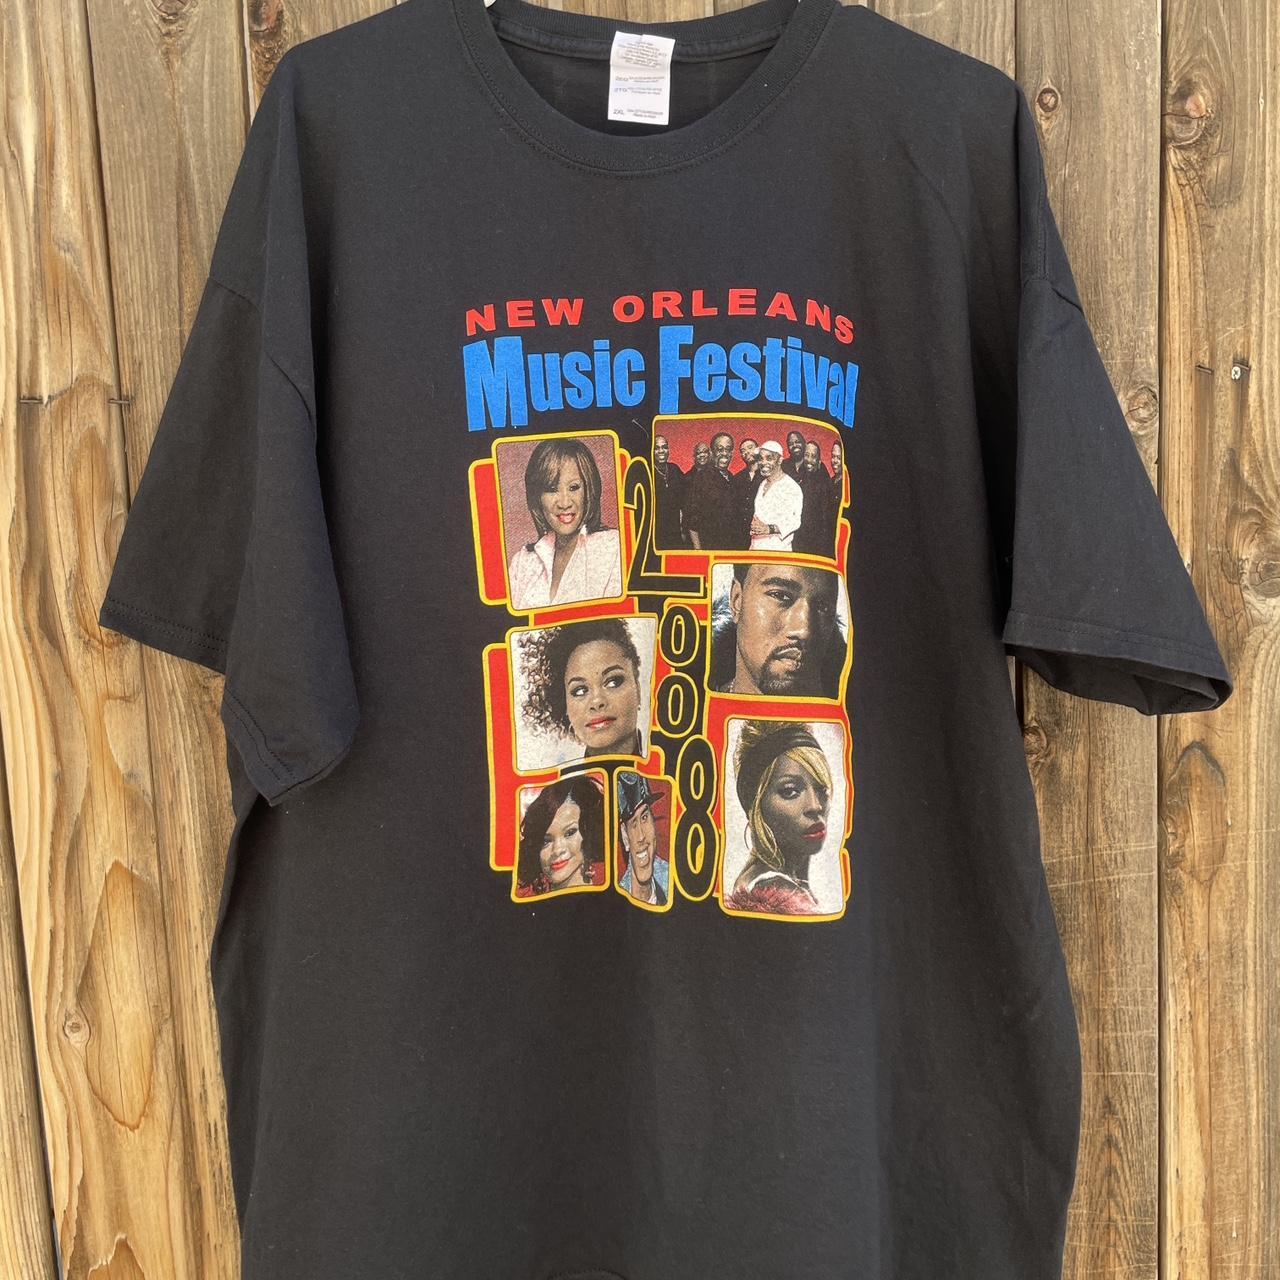 Supreme Men's T-Shirts for sale in Hargrove, Louisiana